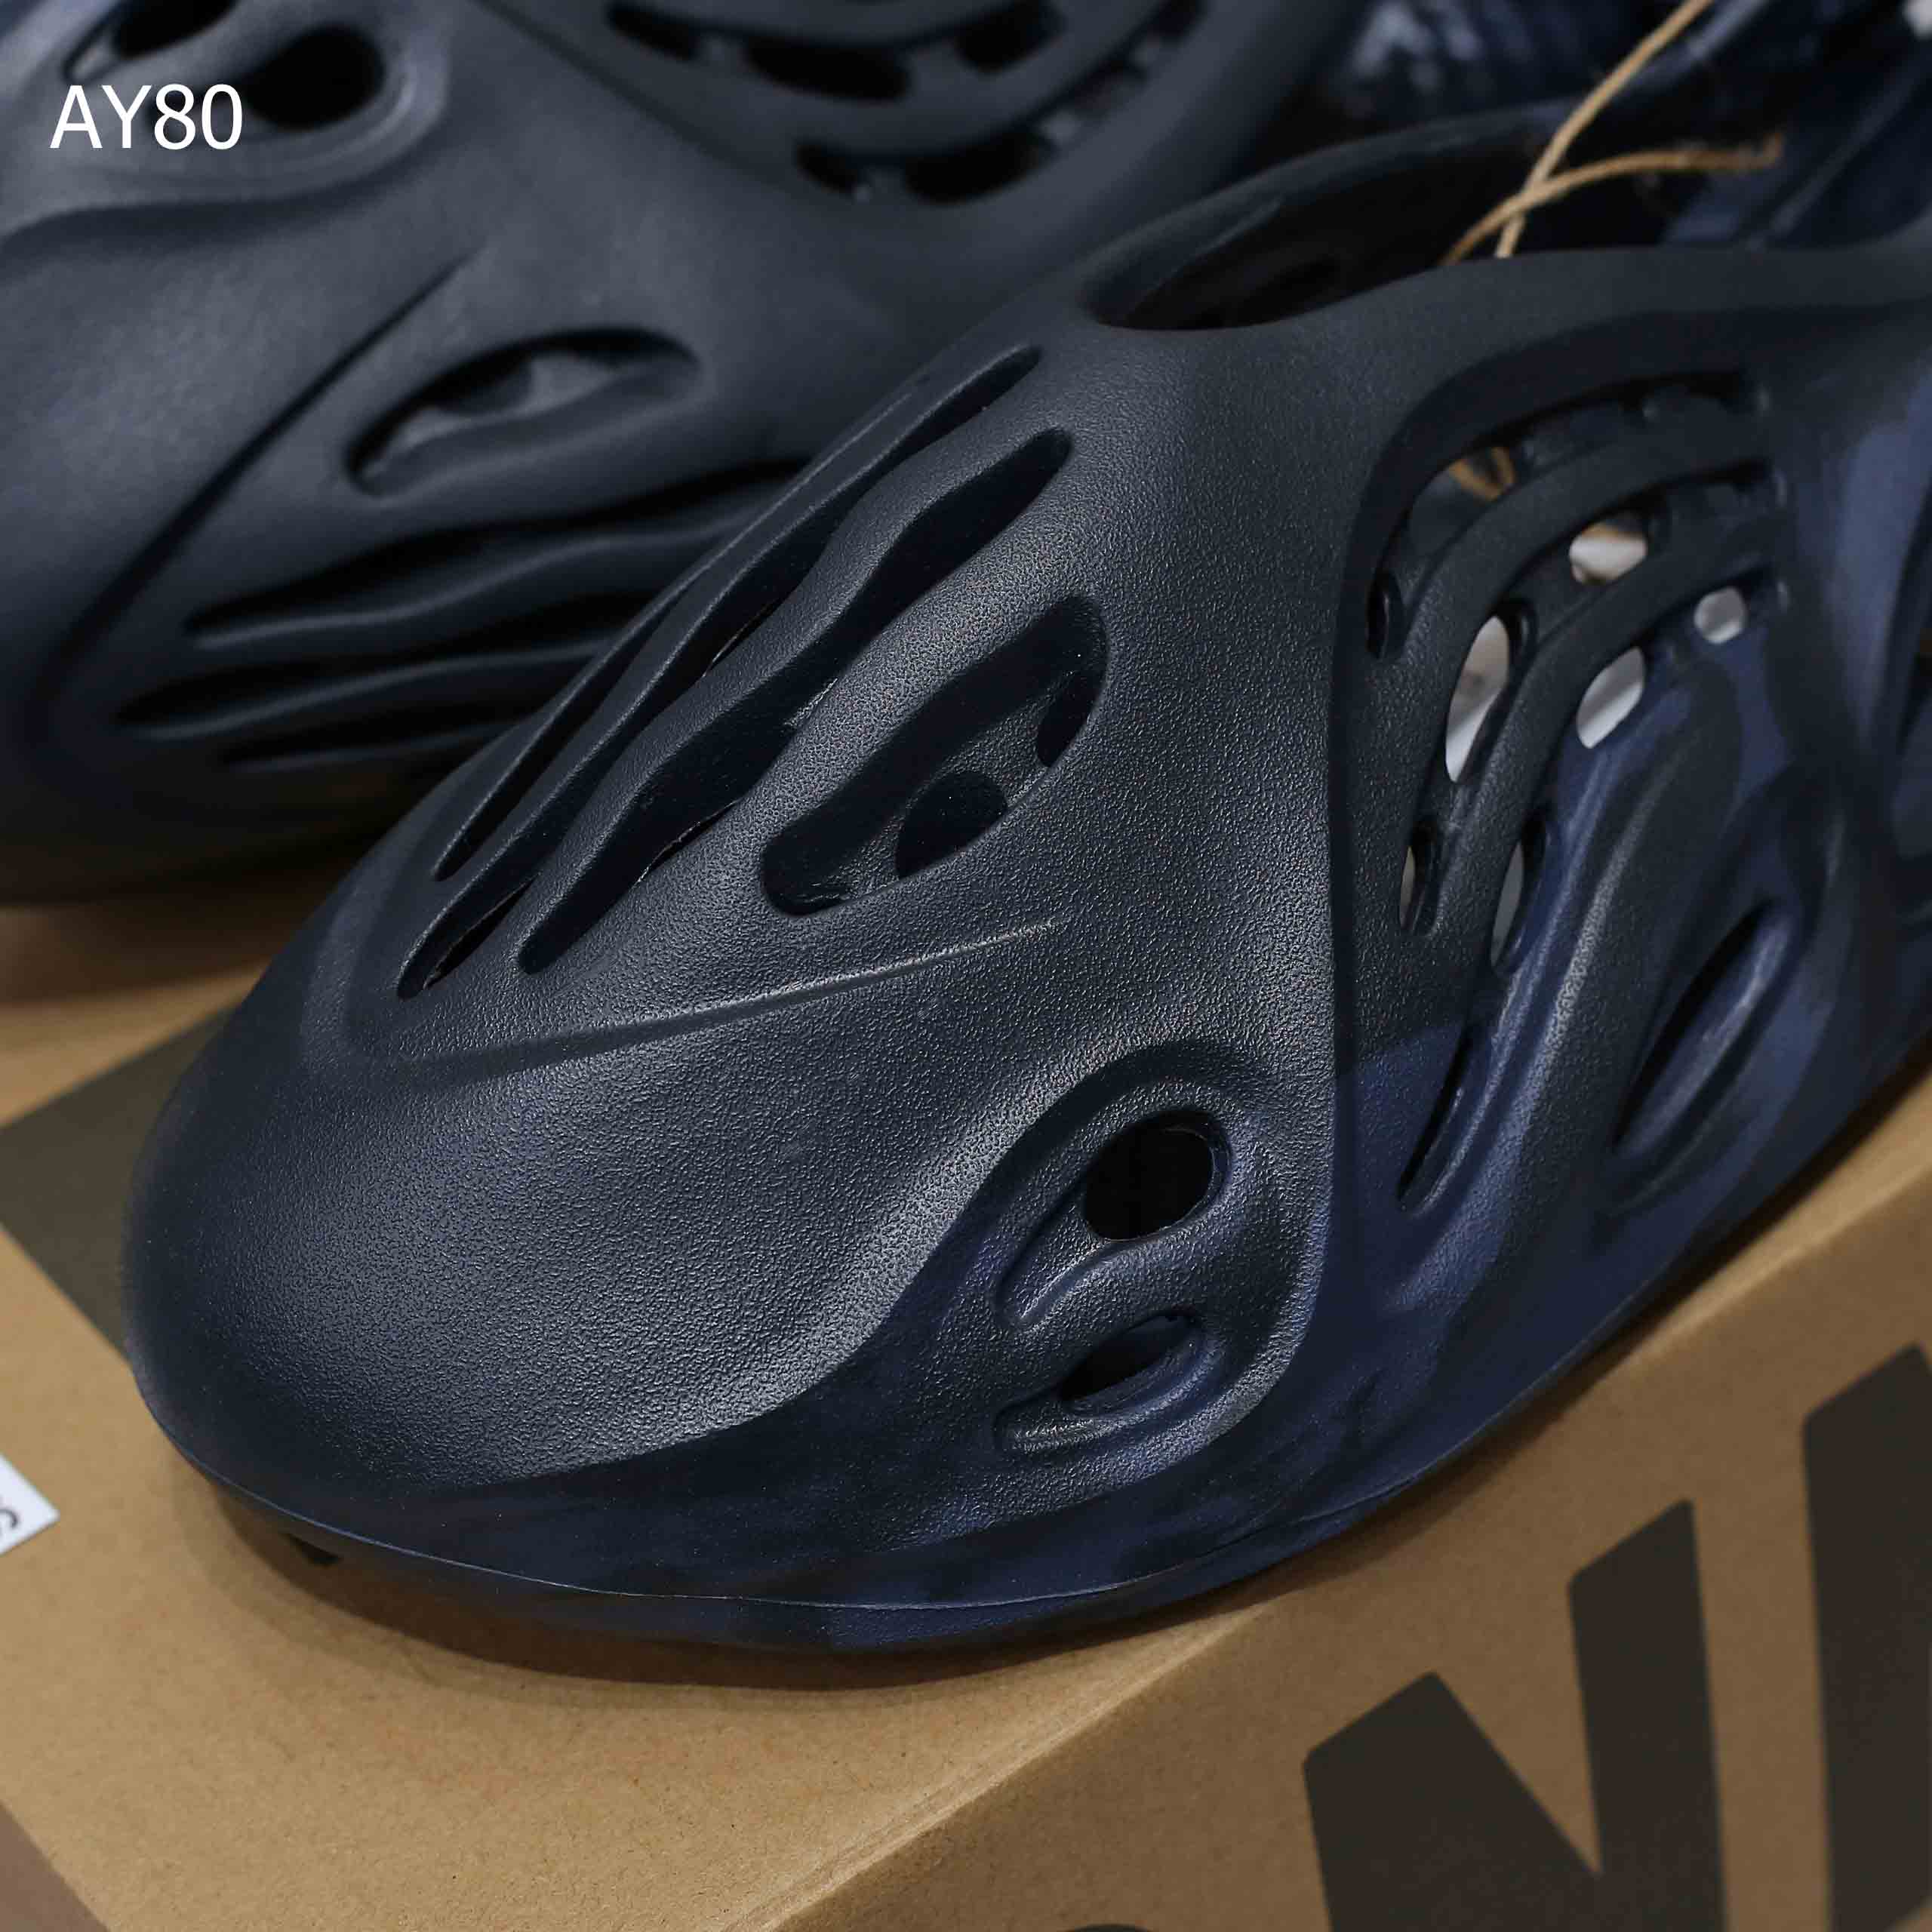 Giày Adidas Yeezy Foam Runner ‘Mineral Blue’ Rep 1:1